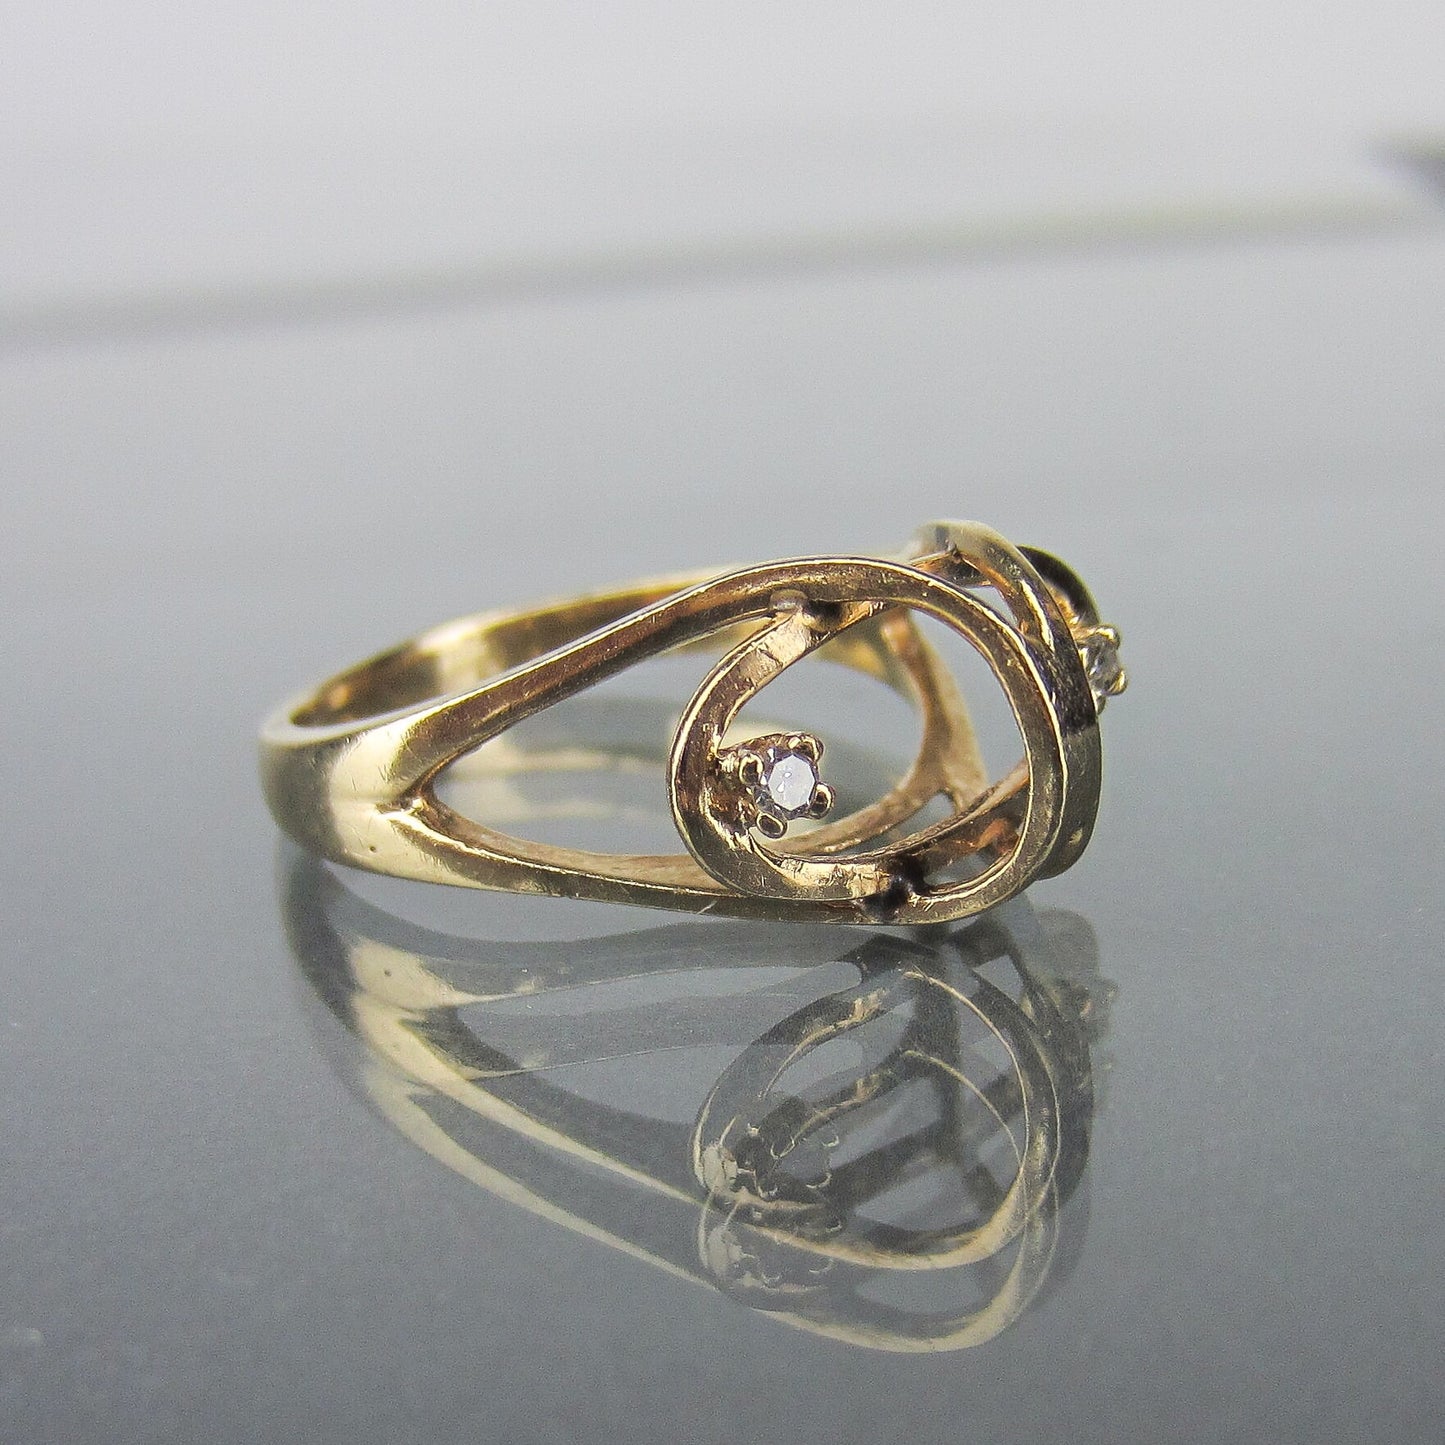 SOLD--Modernist Diamond Sculptural Ring 14k c. 1960